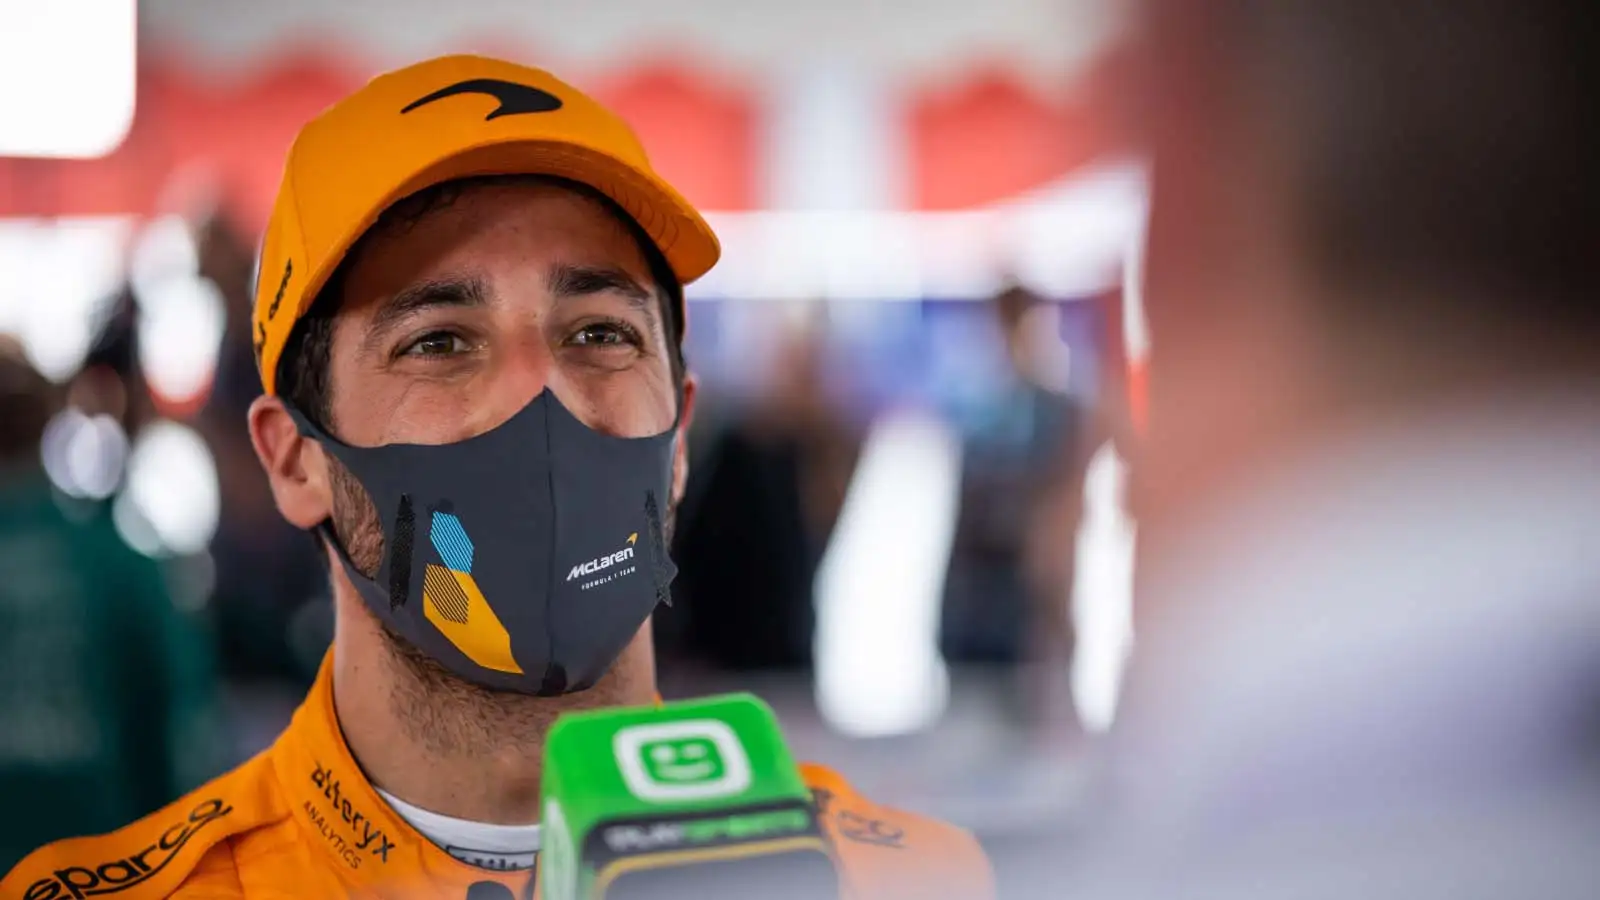 McLaren driver Daniel Ricciardo is interviewed. Imola April 2022.